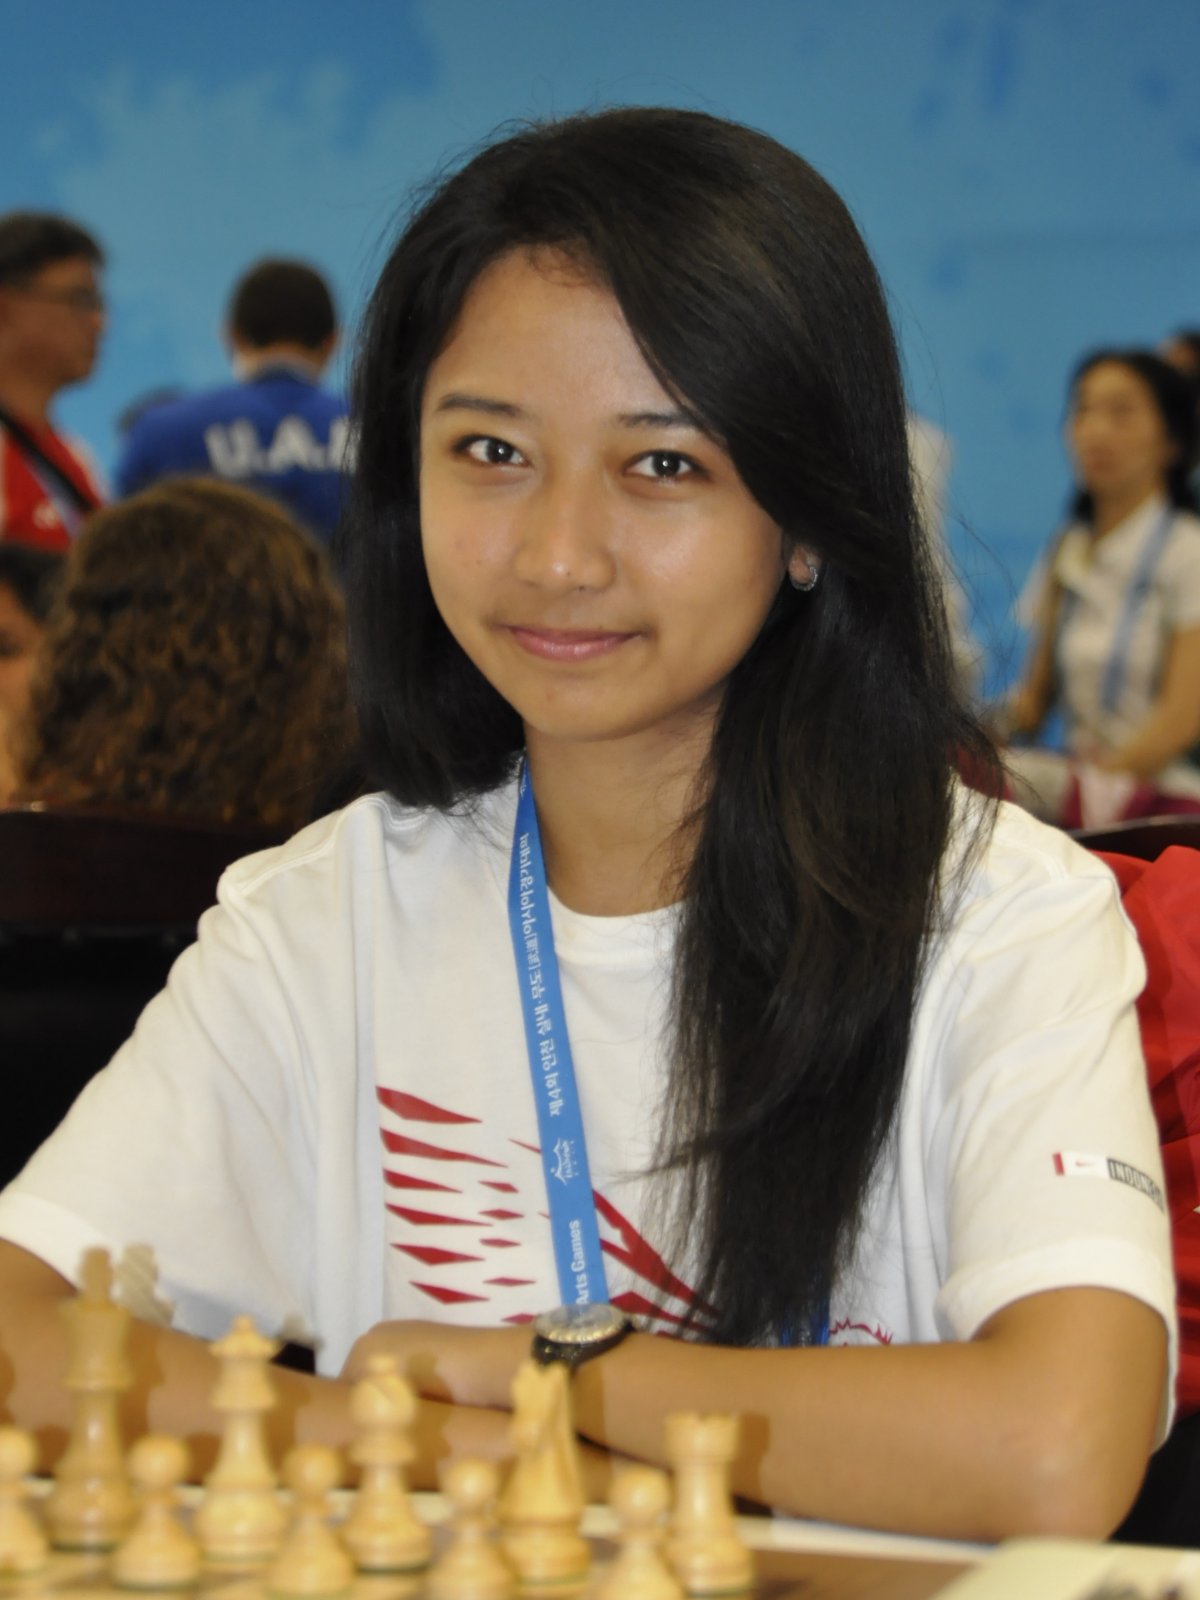 Irene Kharisma Sukandar - Wikipedia